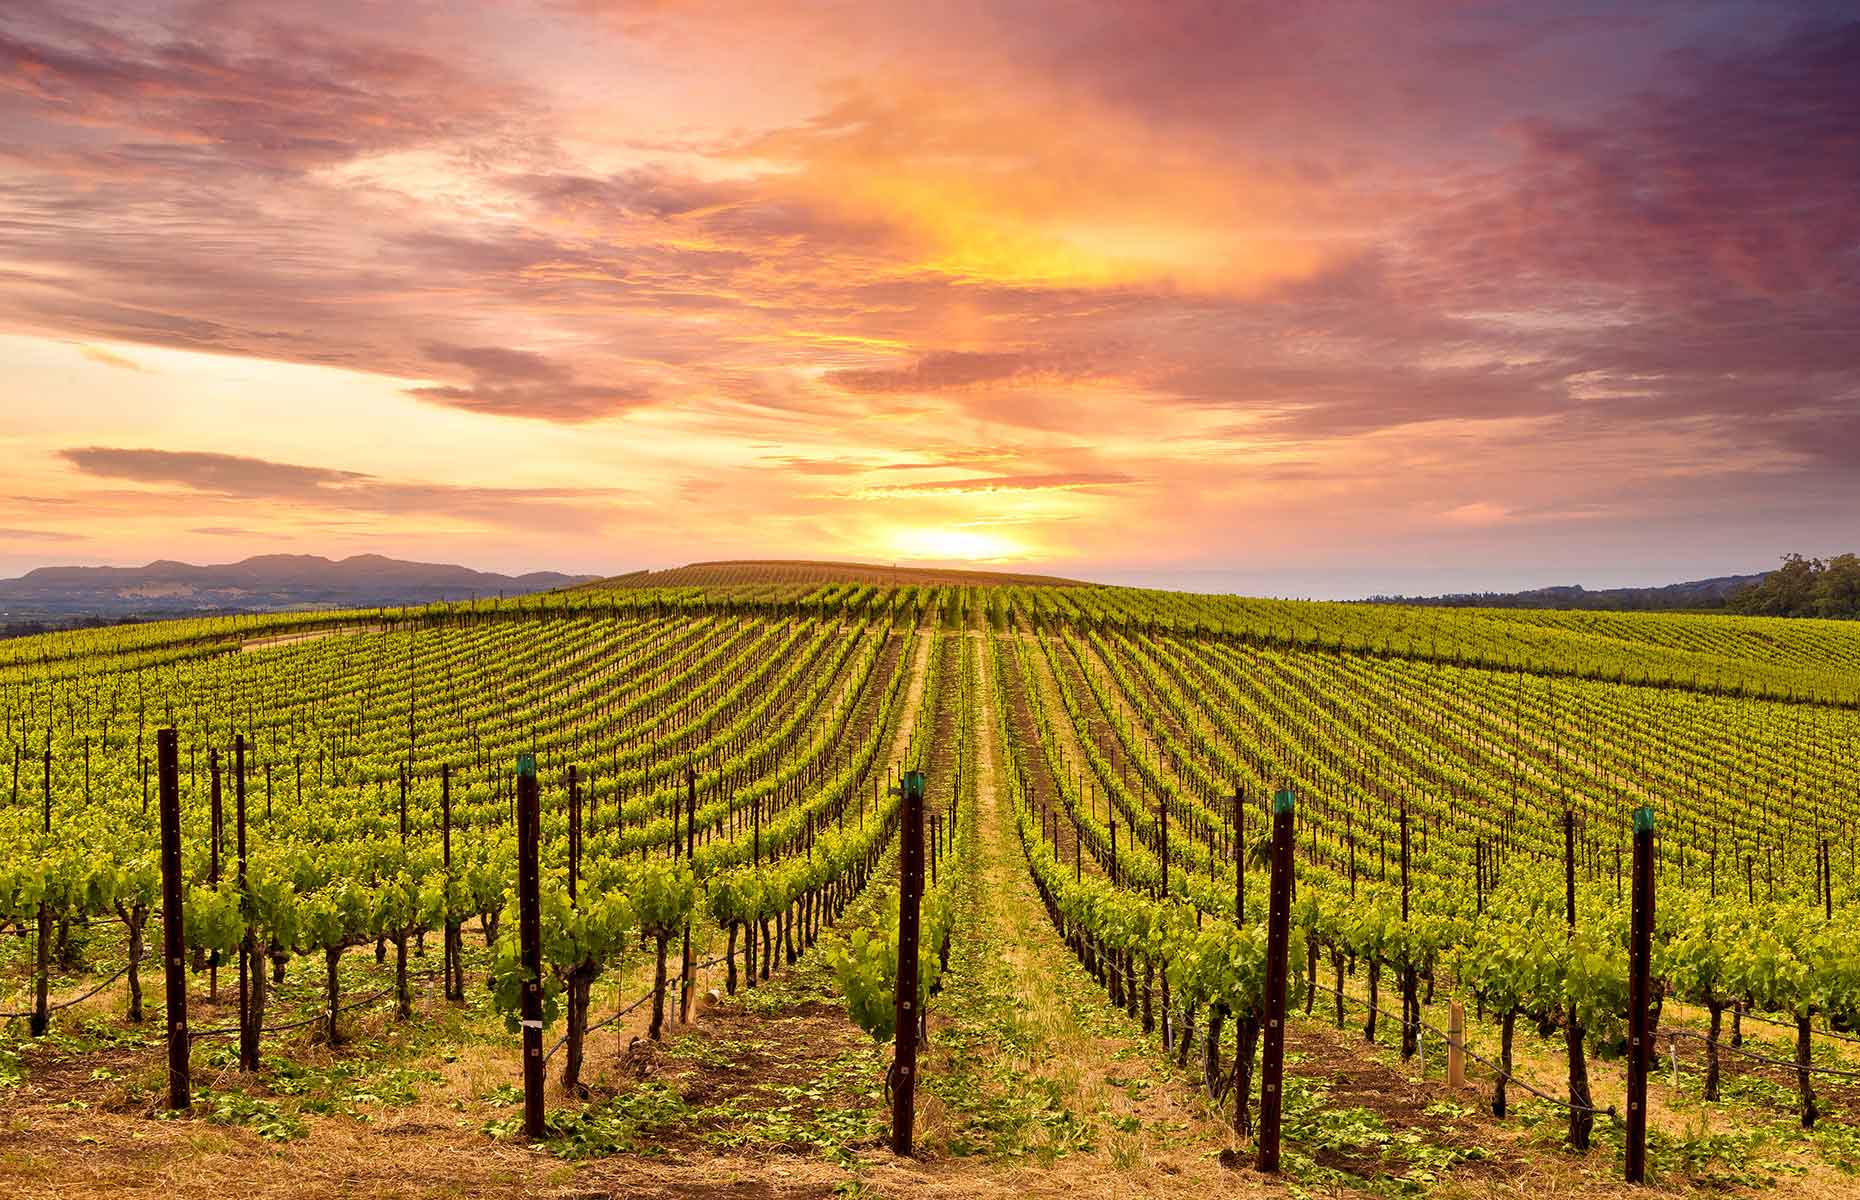 Napa Valley vineyard (Image: Michael Warwick/Shutterstock)